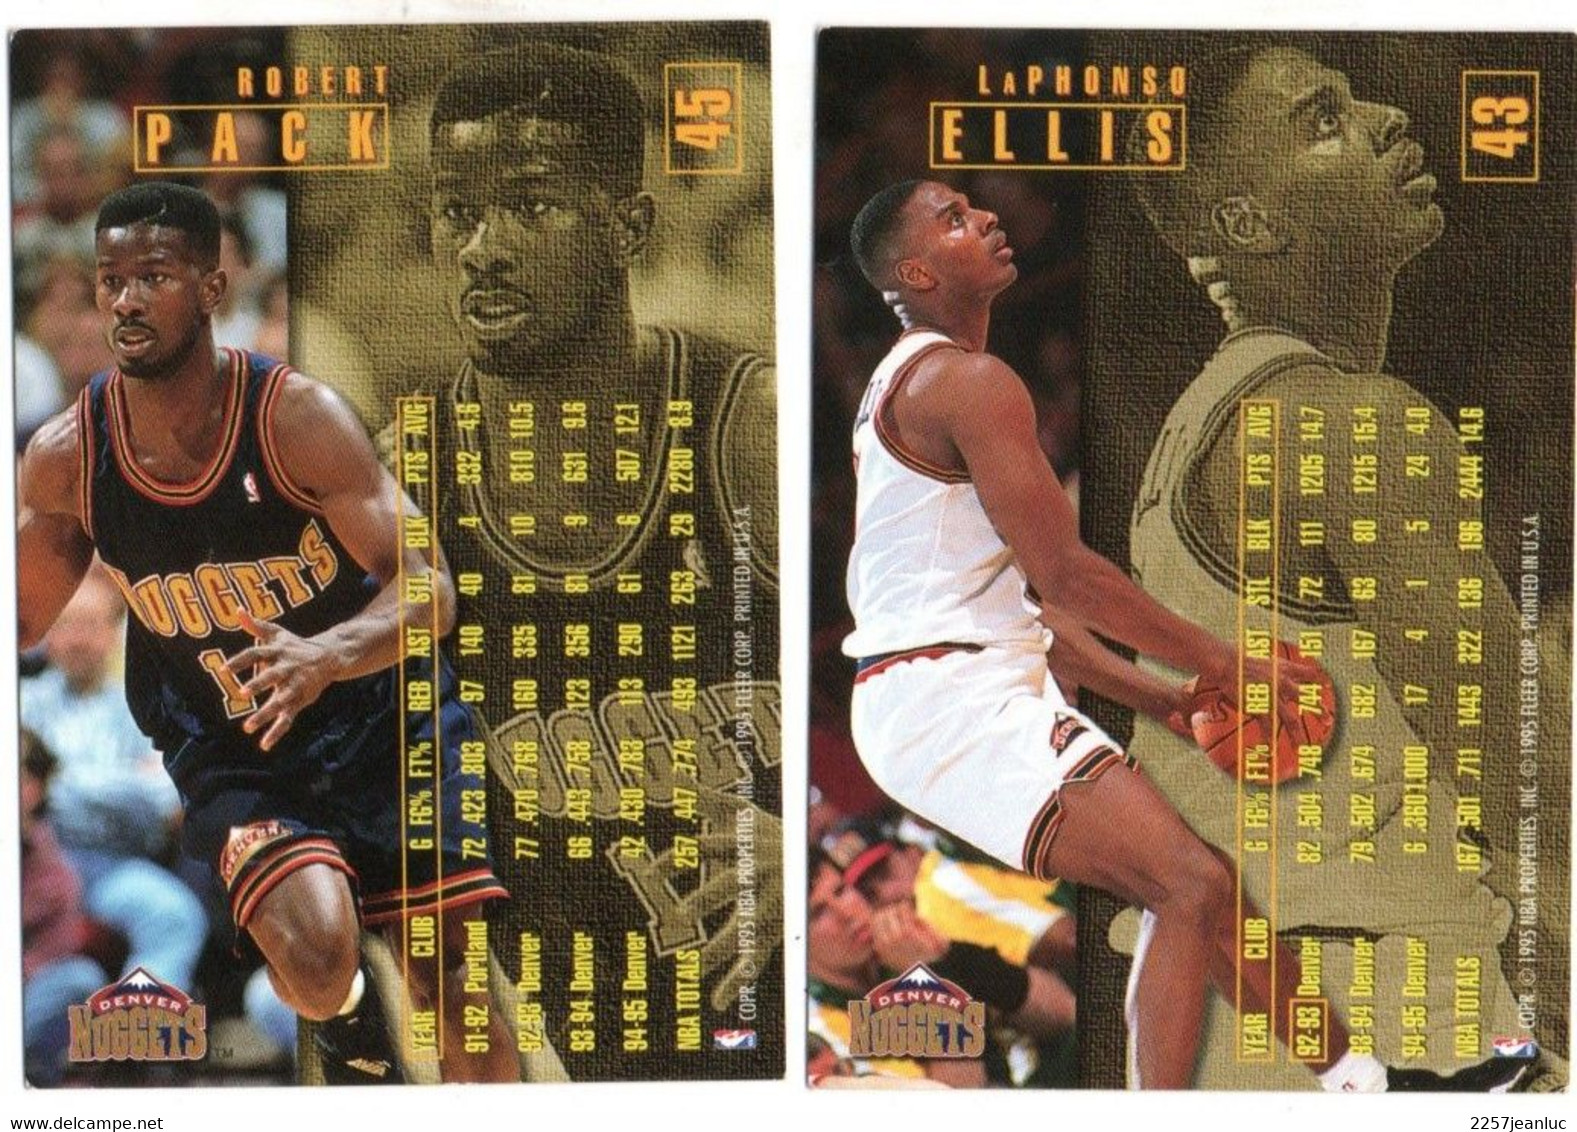 2 Cartes Panini   Basket Ball Denver Nuggets*  Laphonso Ellis & Robert Pack* Fleer /1995.1996 - Basketball